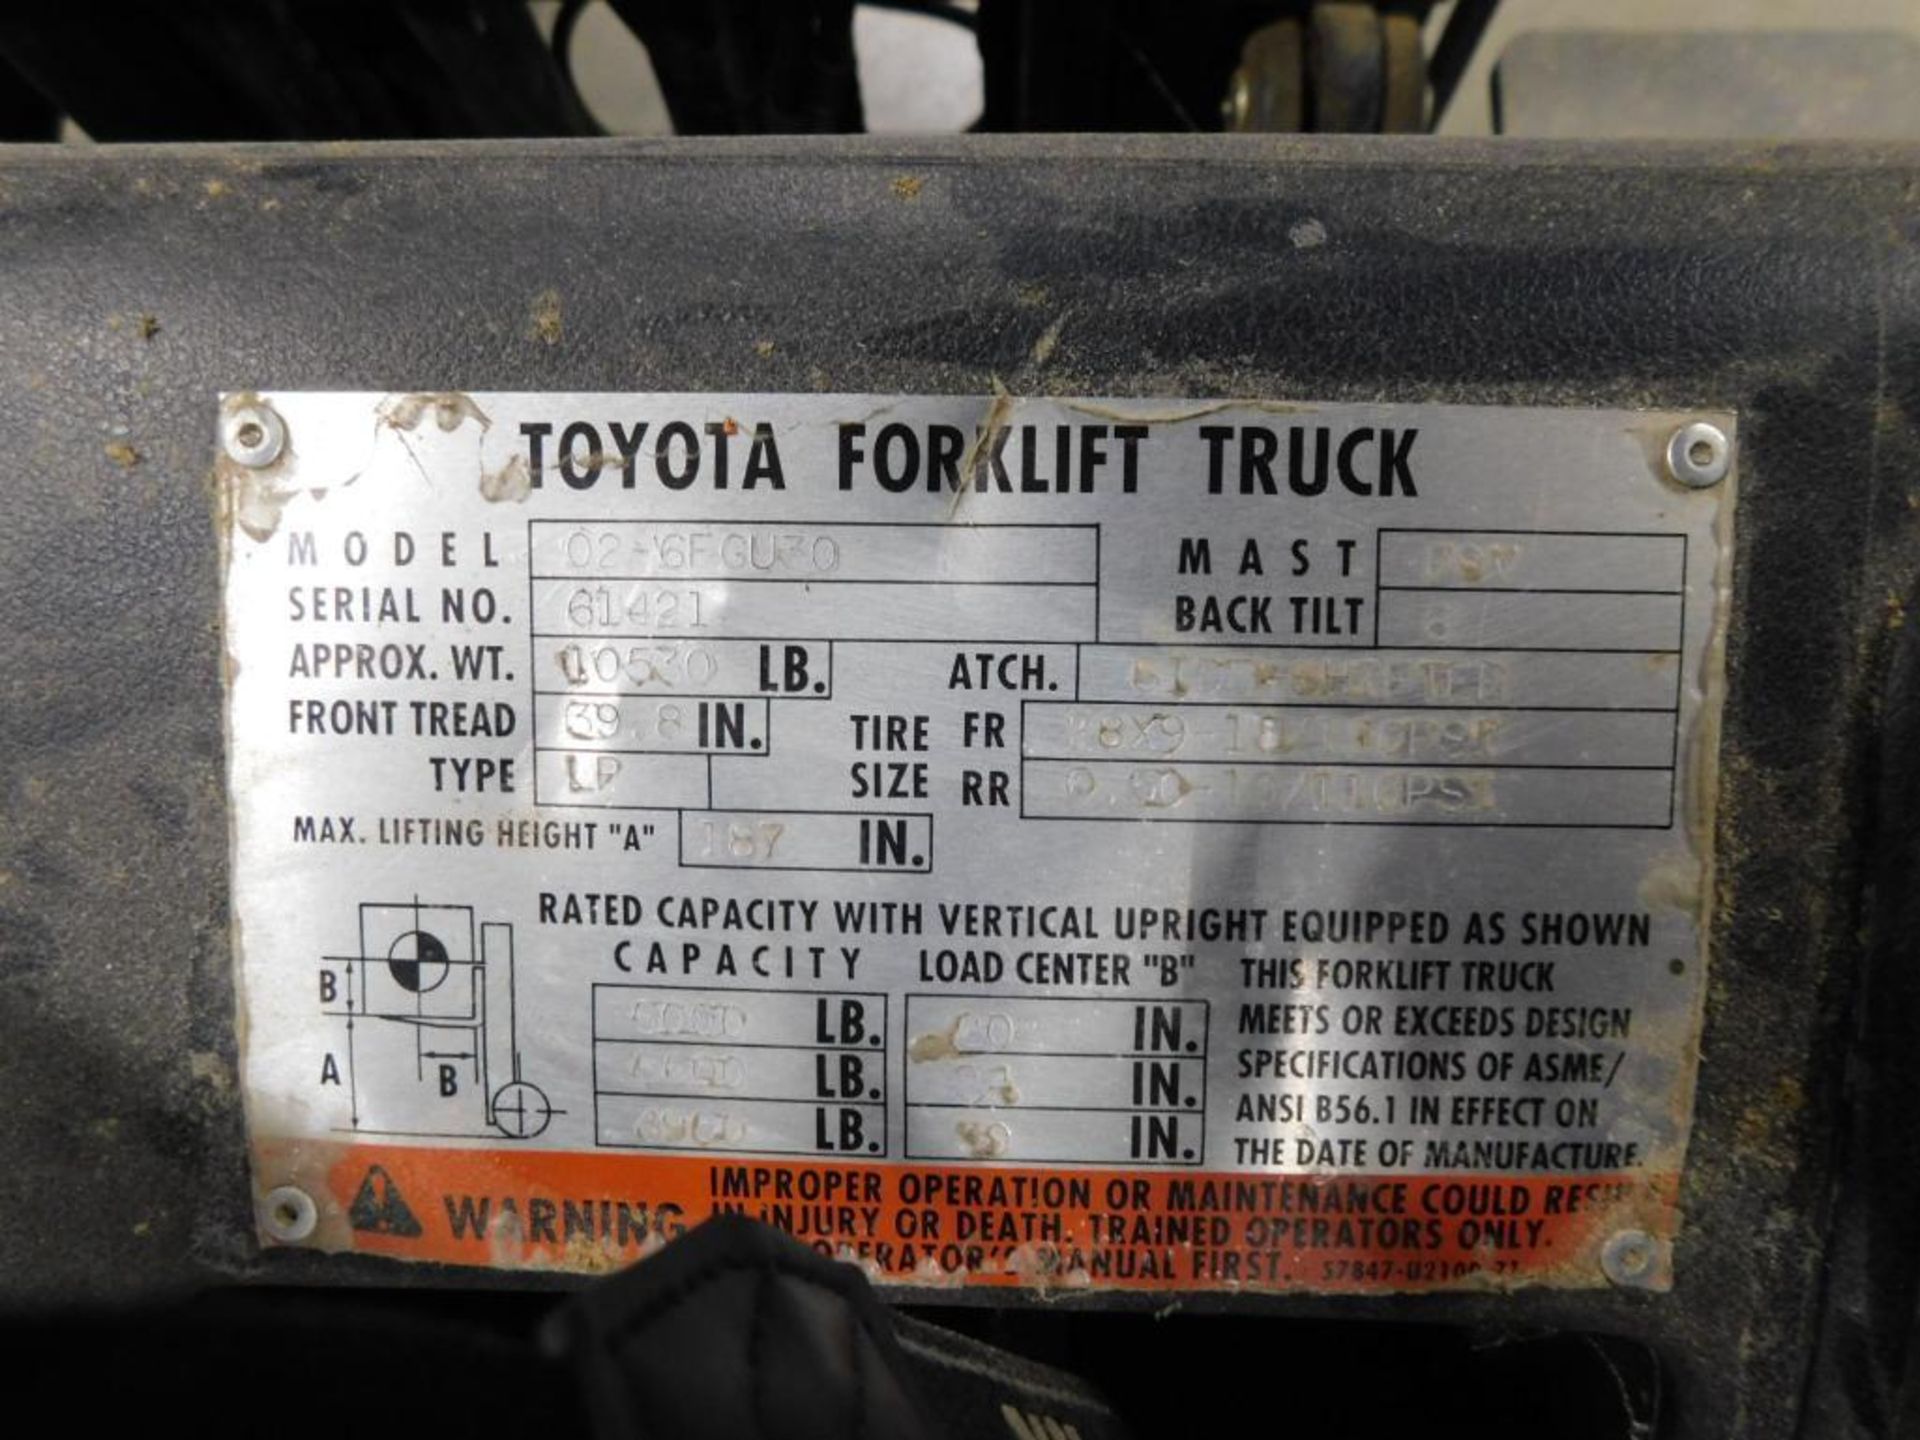 Toyota LP Forklift Model 02-6GFU30, S/N 61421, 6000 lb. Cap, Triple Mast, Side Shift, Solid Outdoor - Image 9 of 10